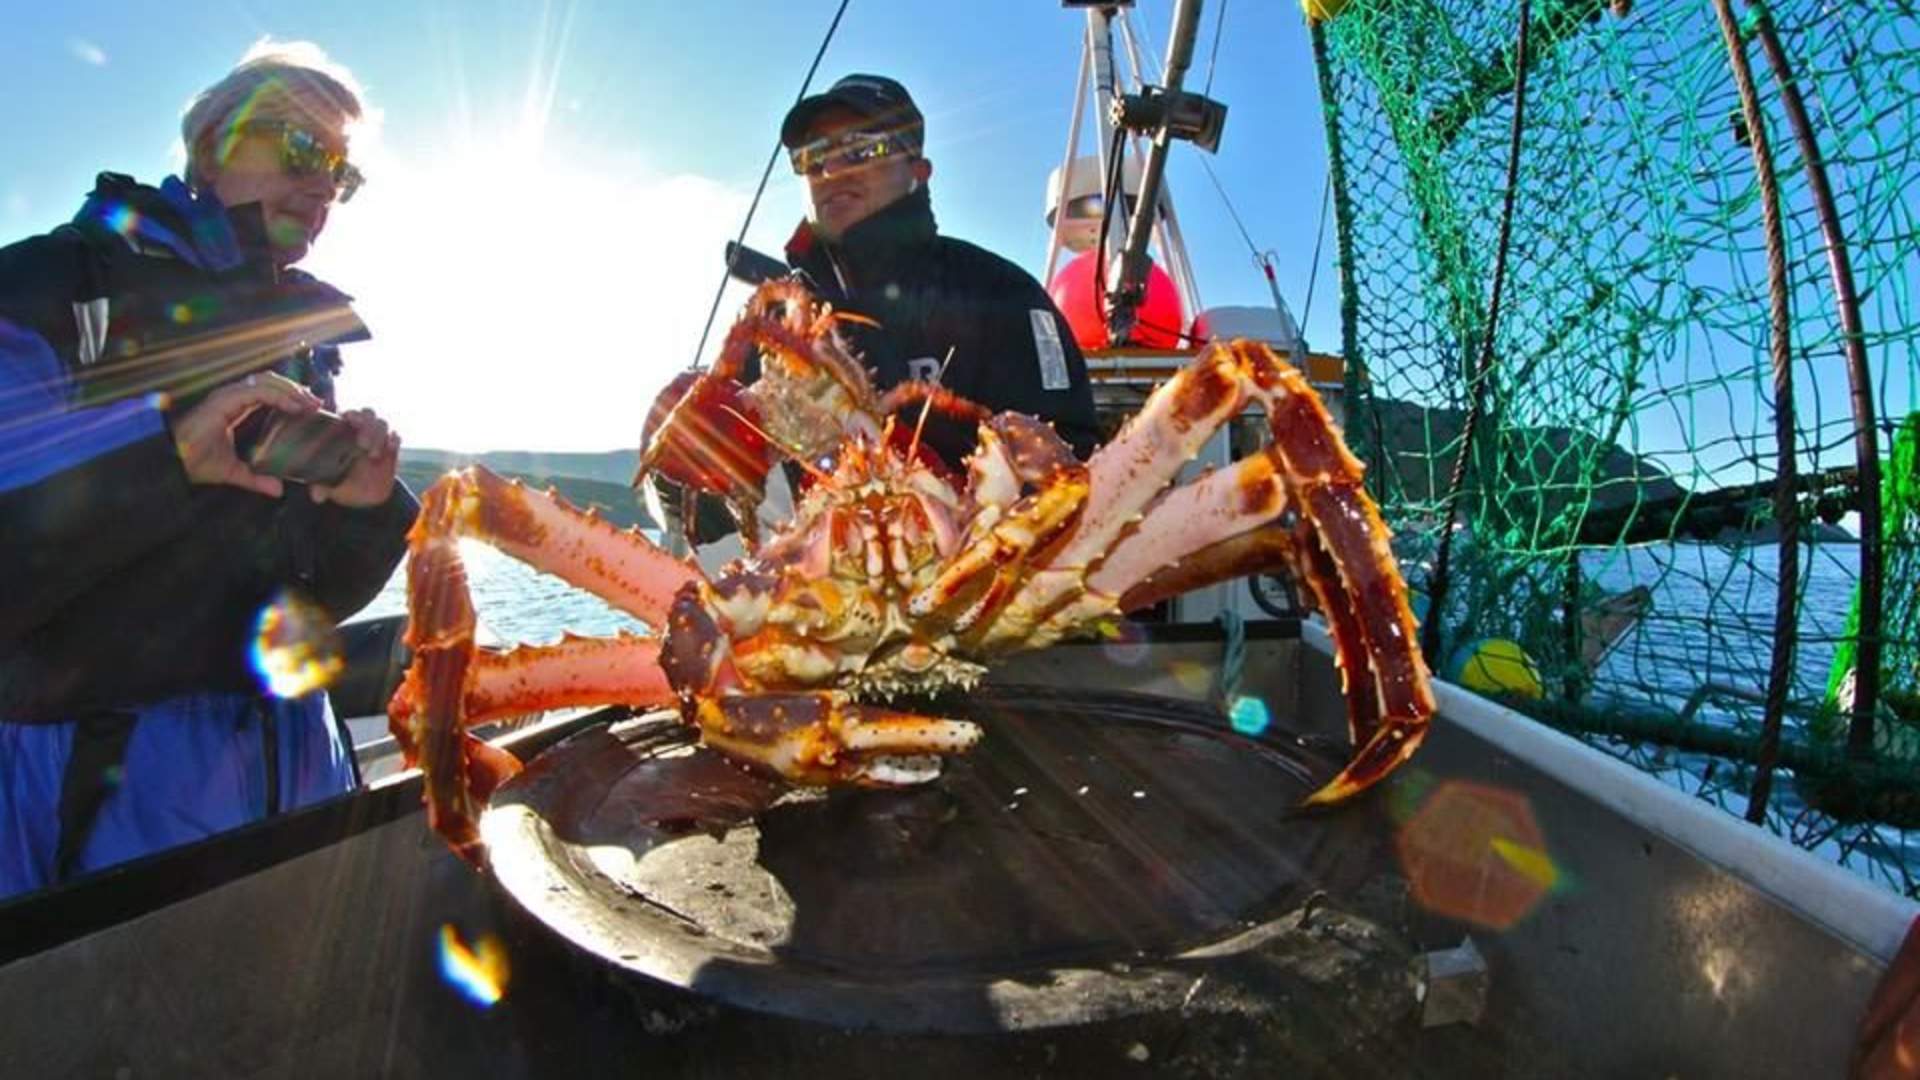 King crab & wildlife safari, Action & Adventure, Skarsvåg